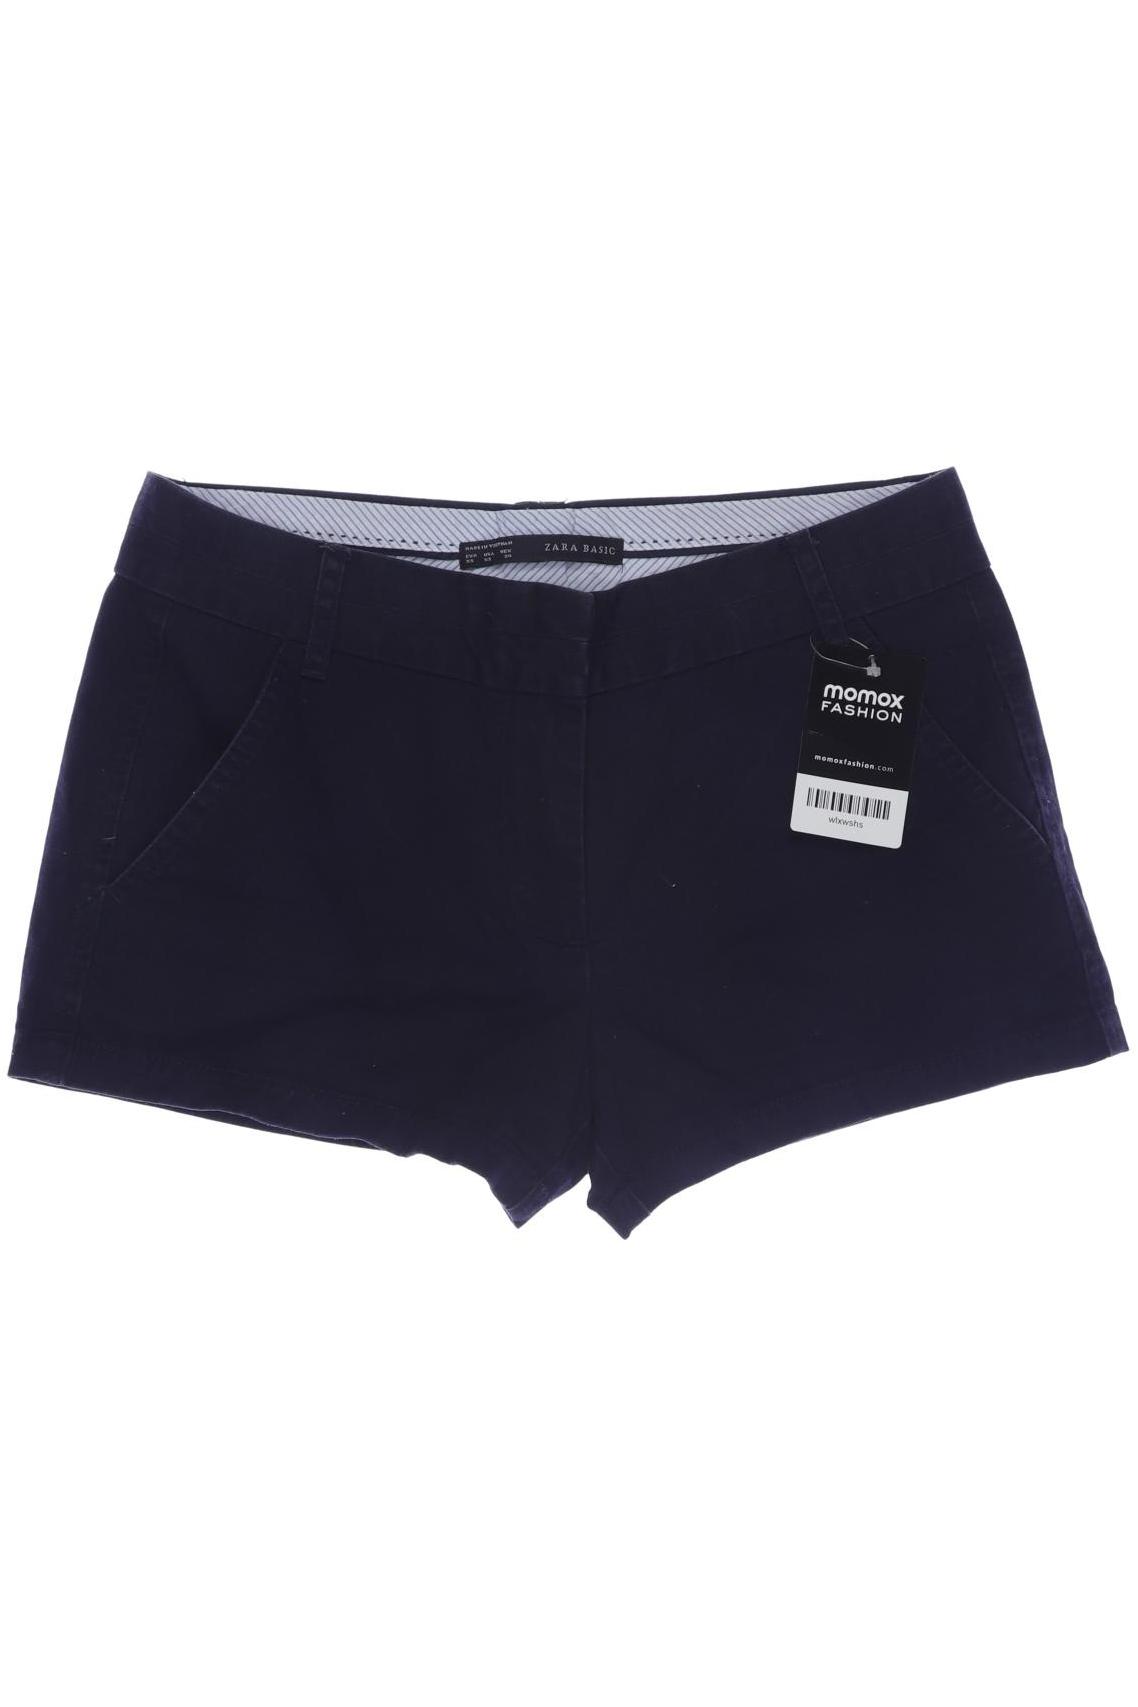 Zara Damen Shorts, marineblau, Gr. 34 von ZARA